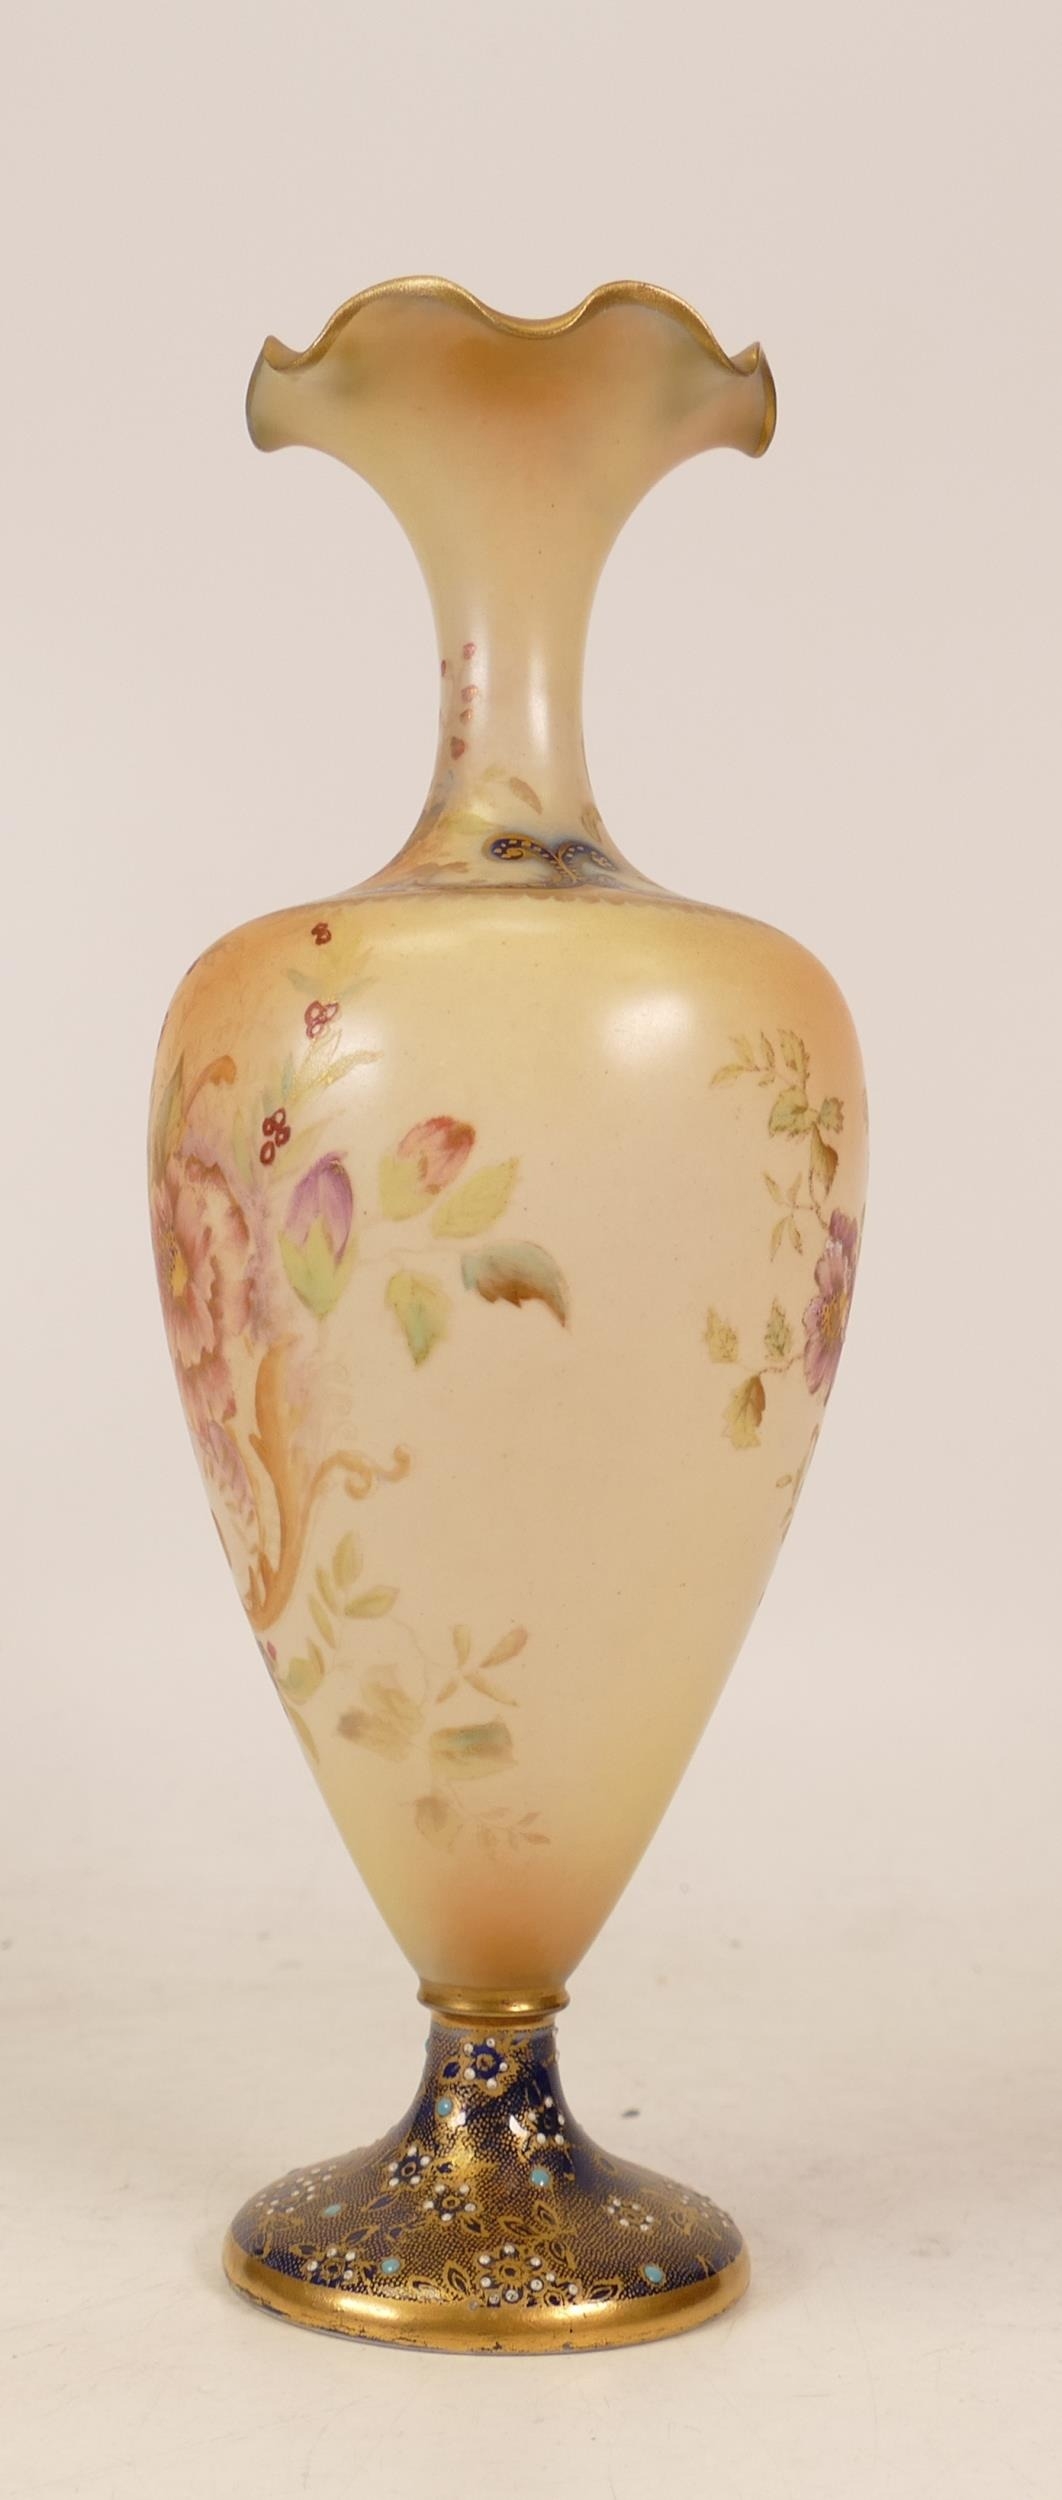 Carlton Ware floral patterned vase. Height 24cm